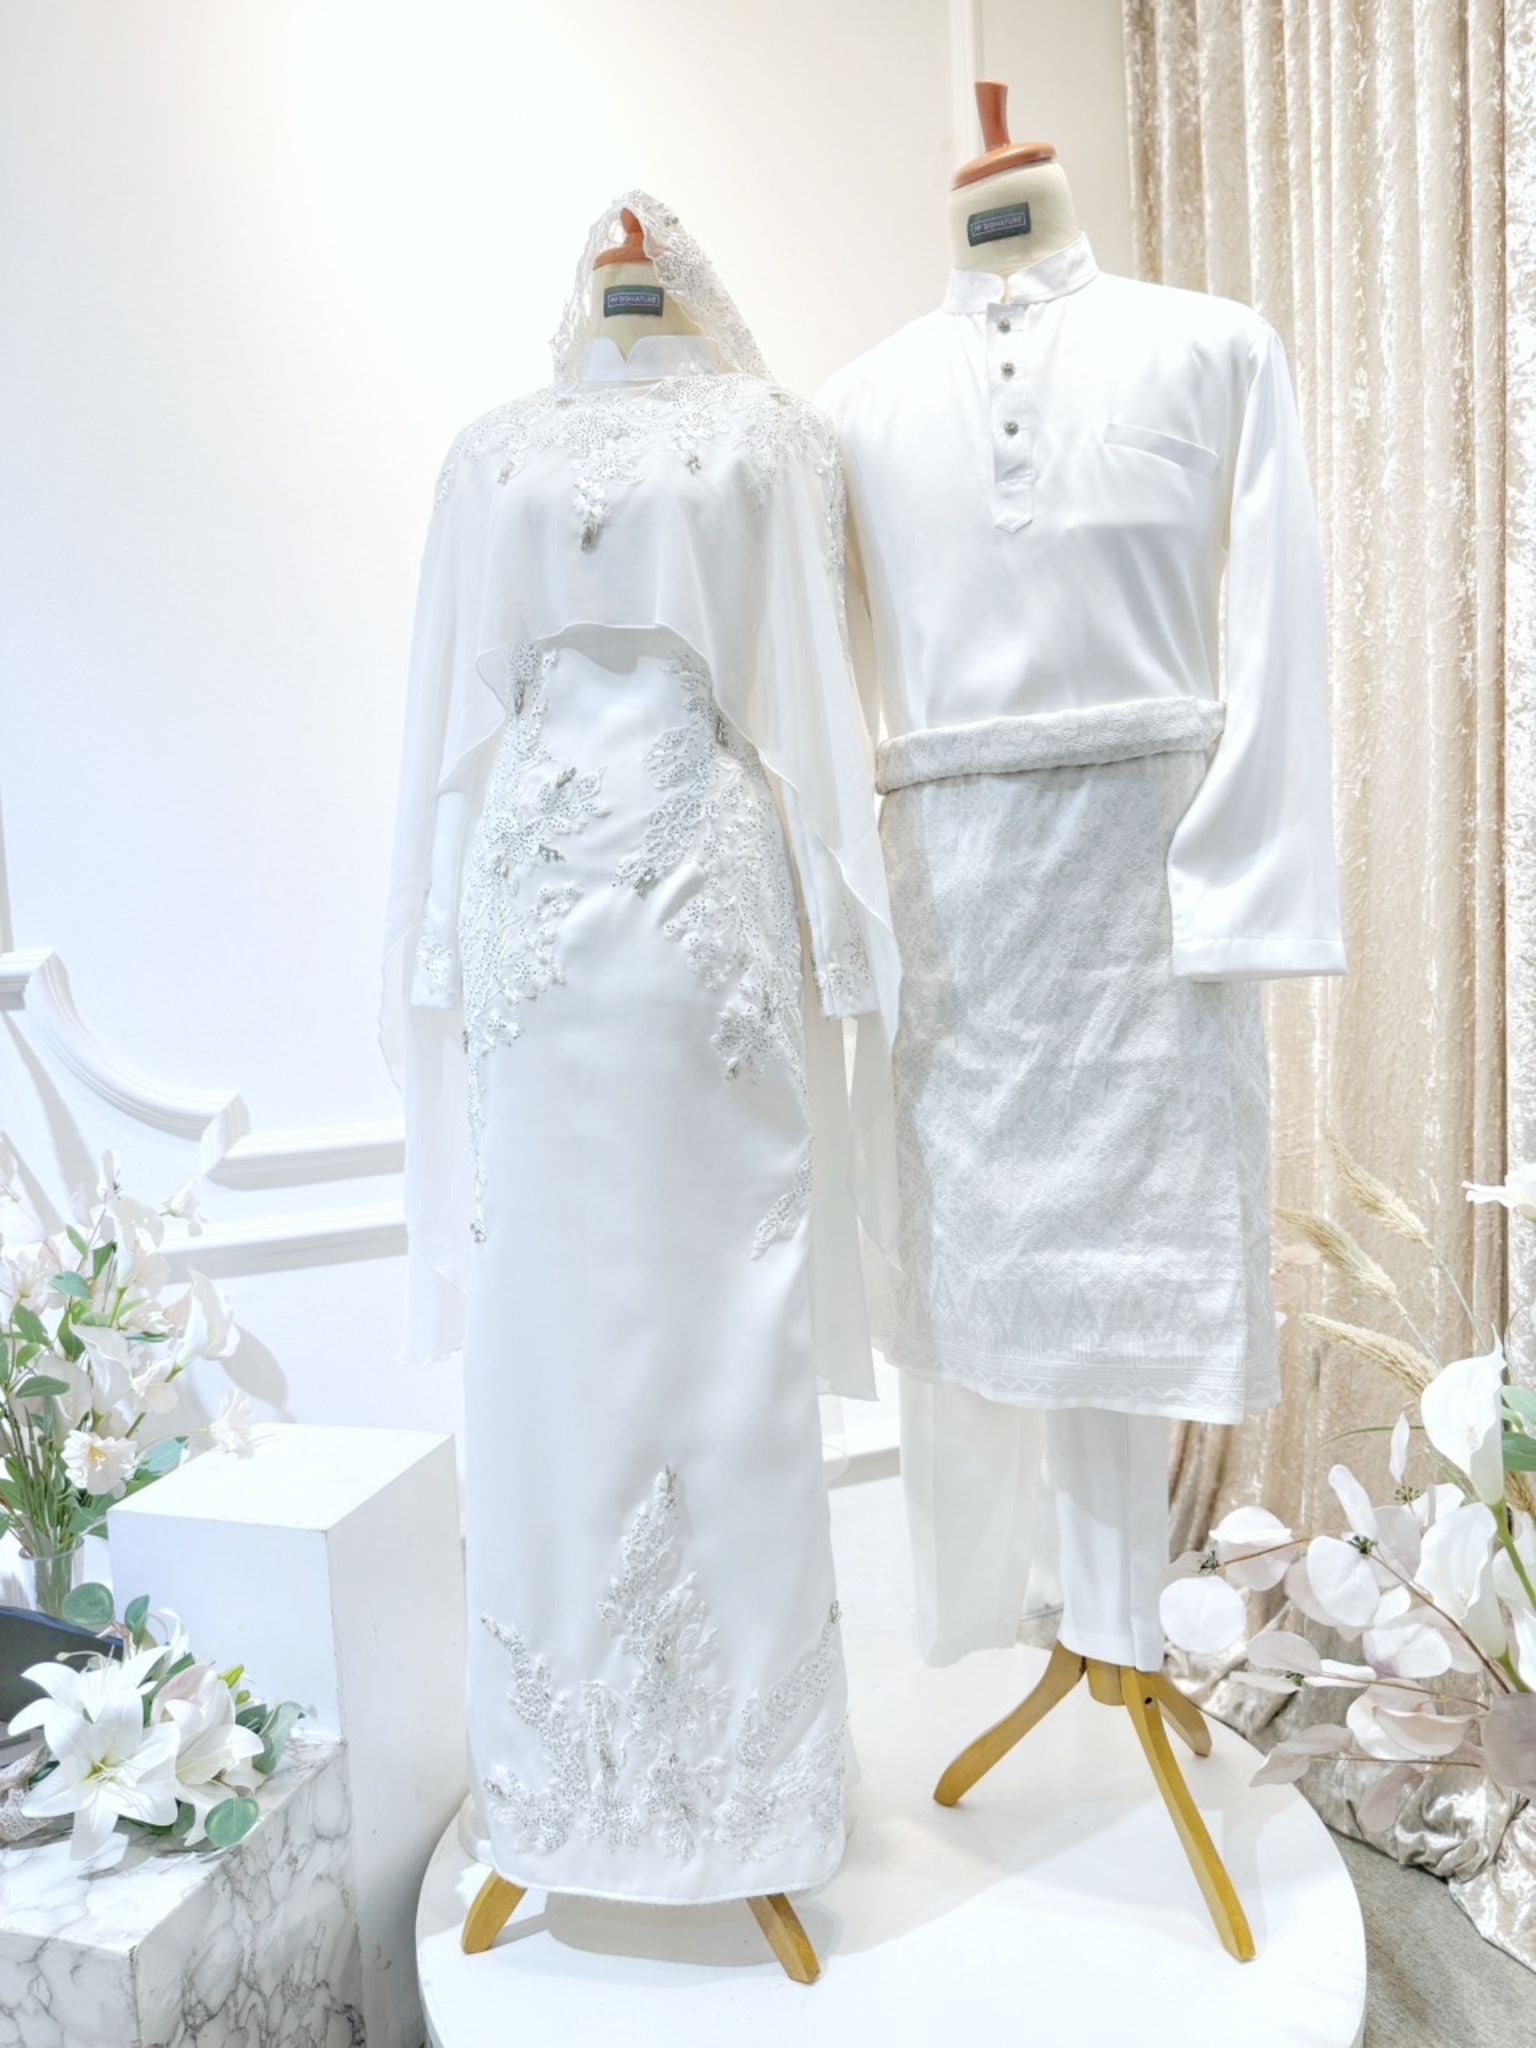 WARDAH - Baju Nikah Off White Double Face Dress with Detachable Cape-Pakej Nikah terus Sanding-Pakej Nikah terus Sanding